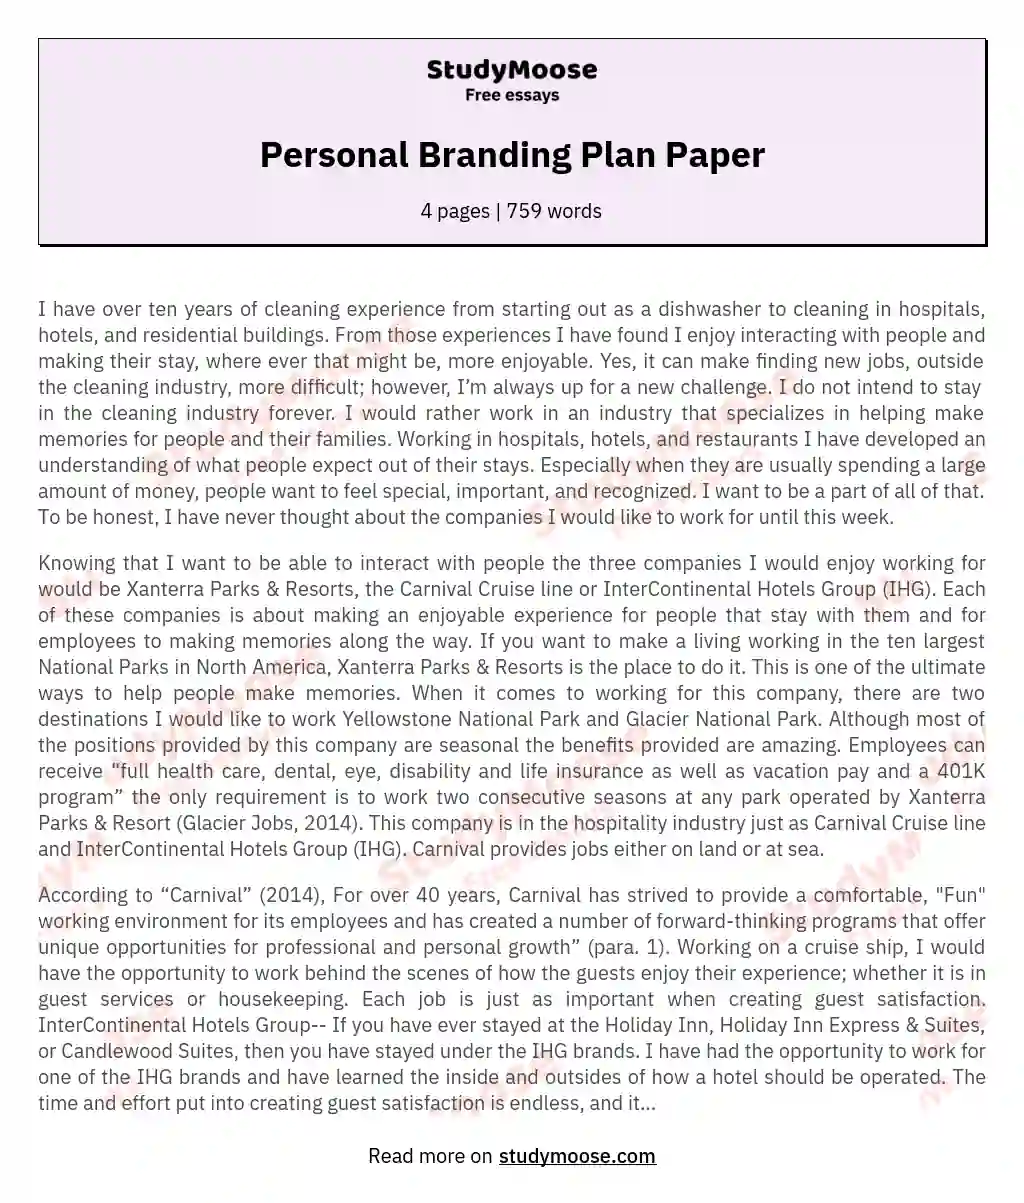 Personal Branding Plan Paper essay